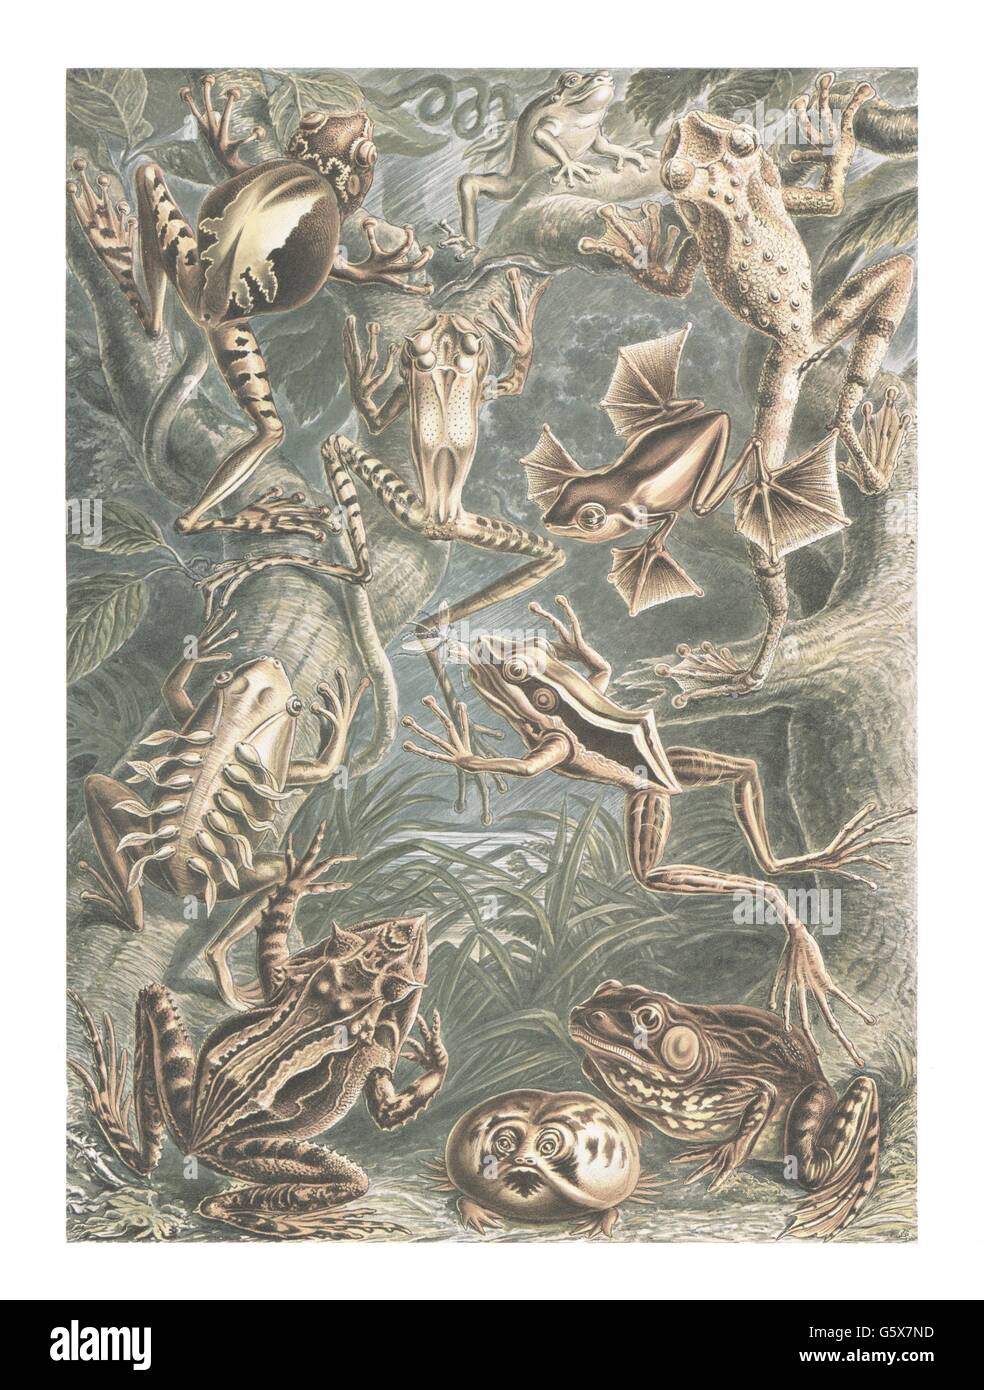 zoologie / Tiere, Amphibien, Frösche (Batrachia), Farblithographie, aus: Ernst Haeckel, 'Kunstformen der Natur', Leipzig - Wien, 1899 - 1904, Additional-Rights-Clearences-not available Stockfoto